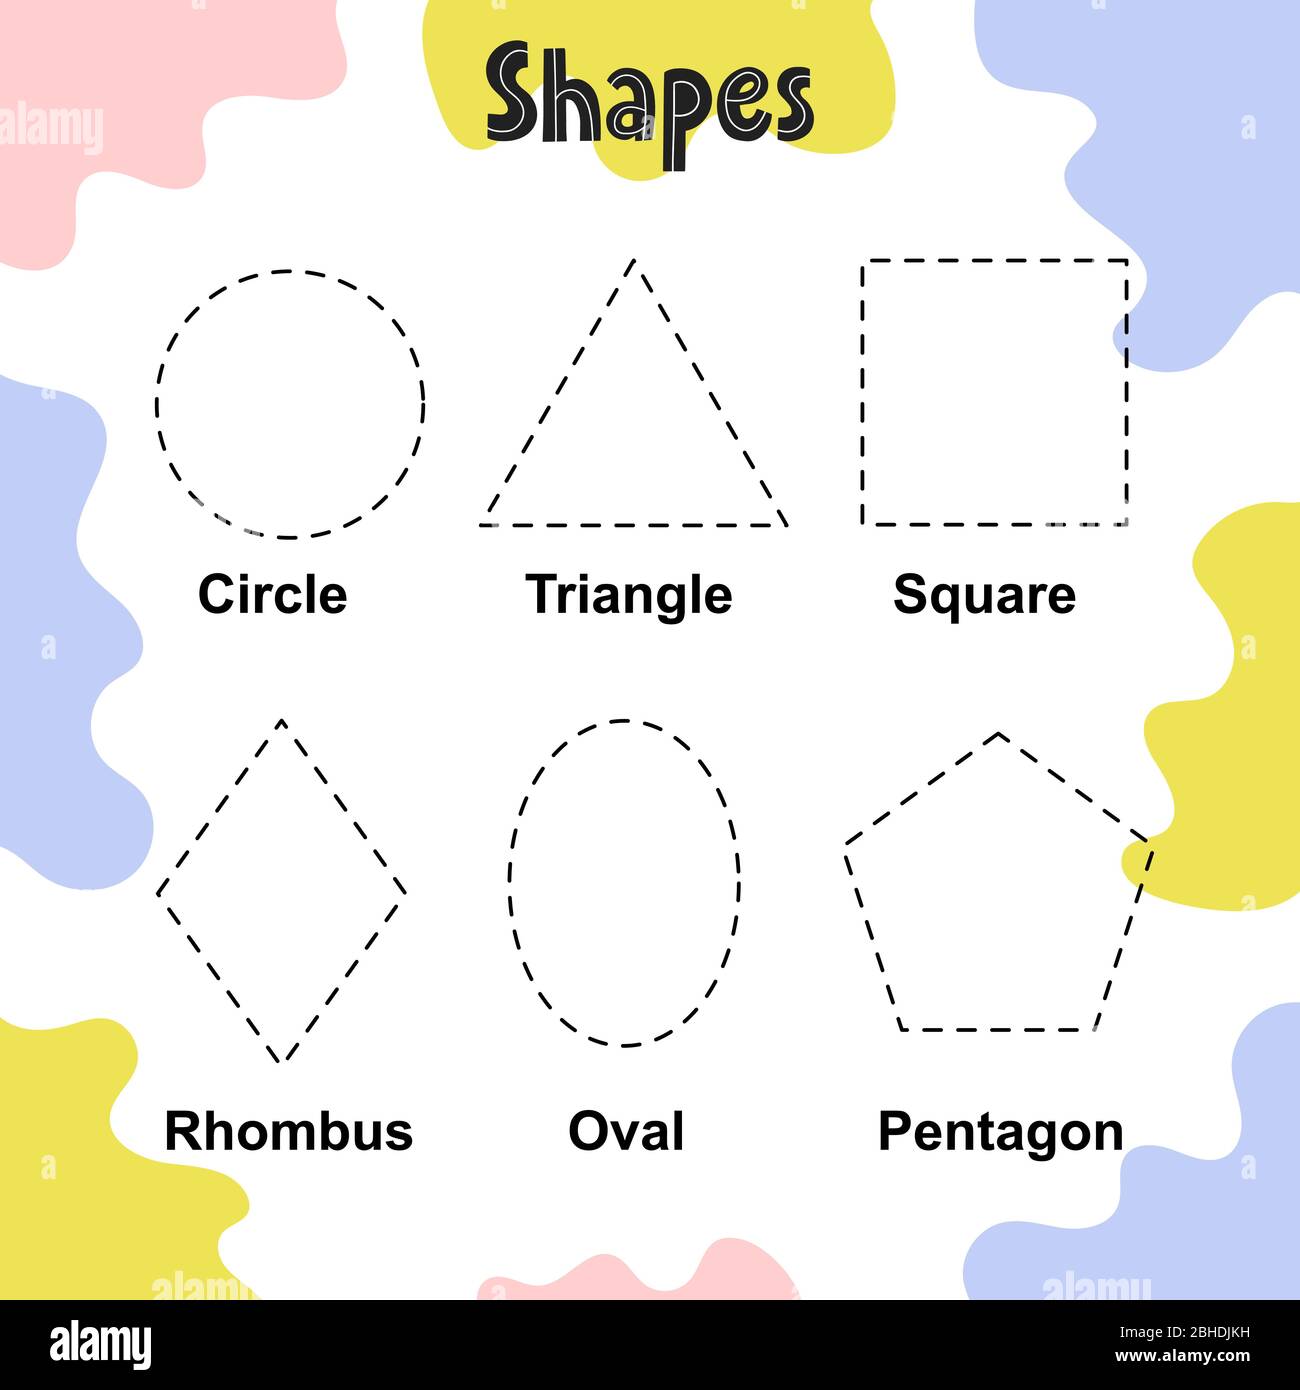 shapes-worksheets-for-preschool-free-printables-mary-martha-mama-pin